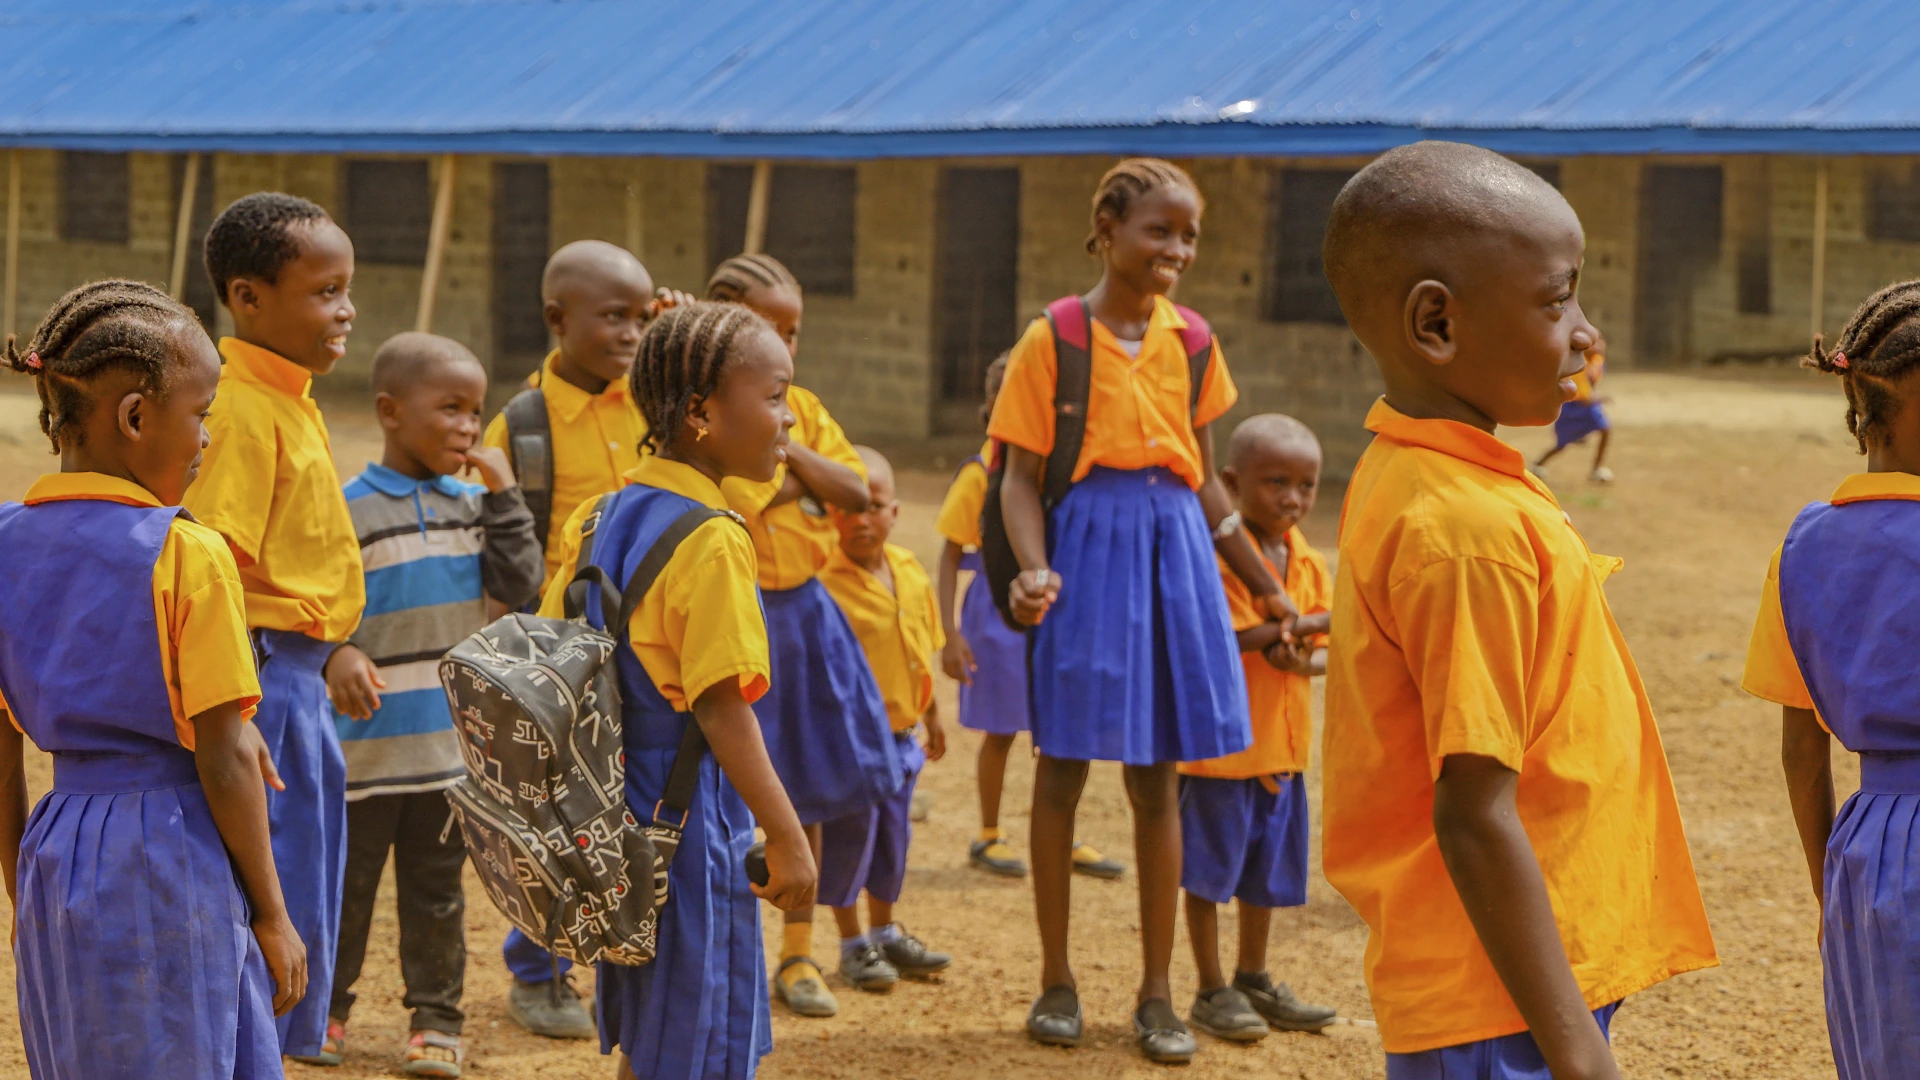 Kids in Africa going to school